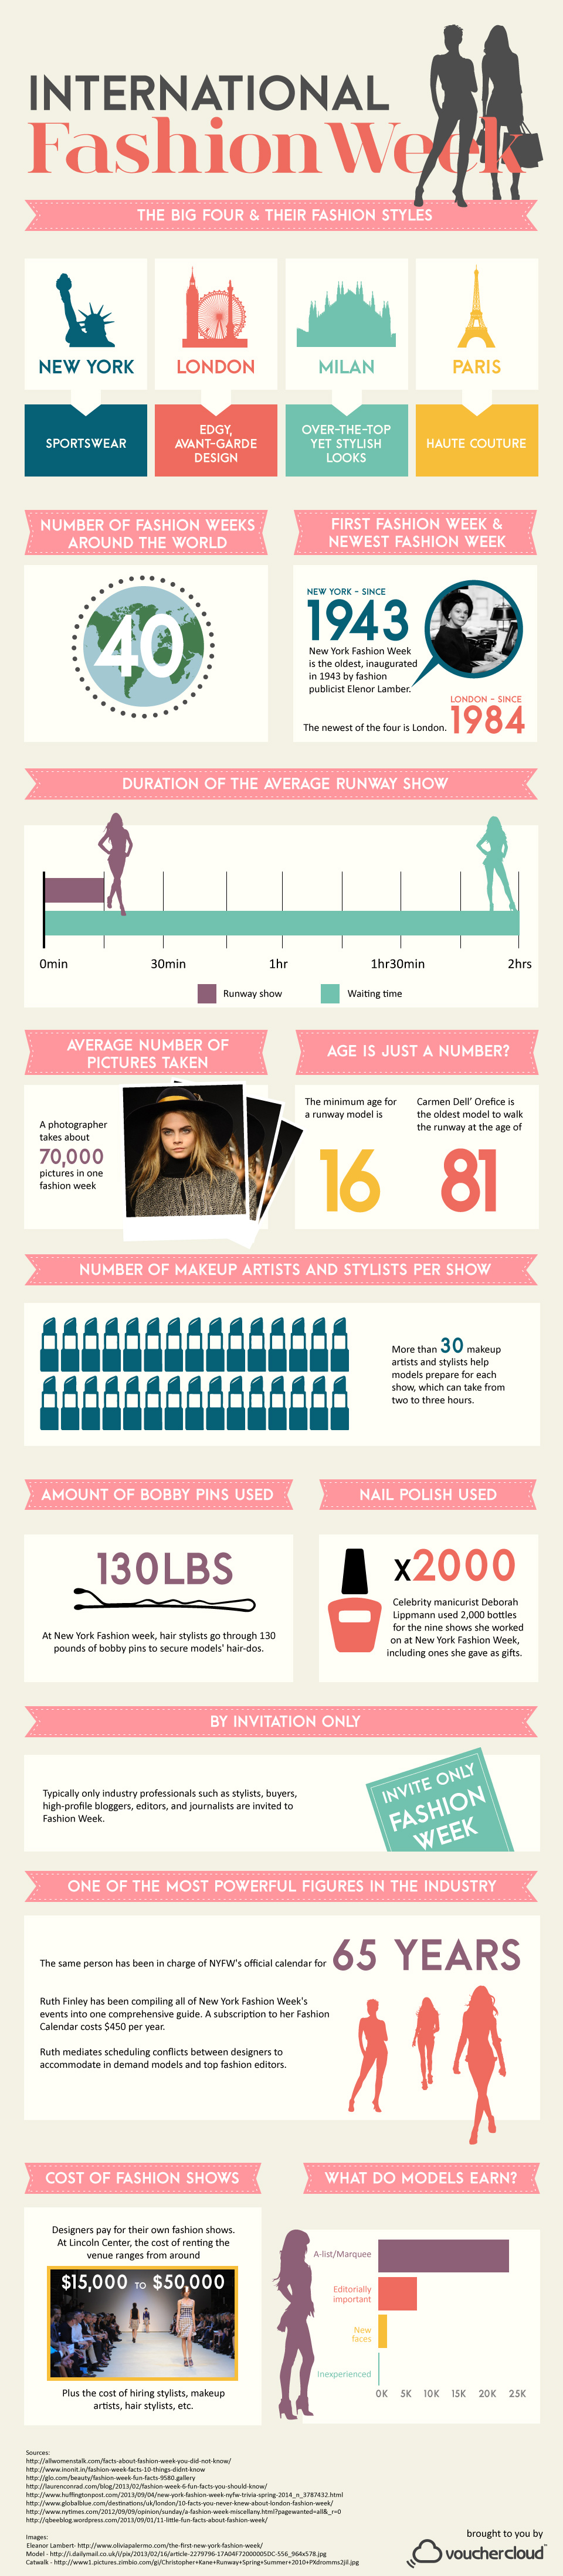 Fashion Week Infographic